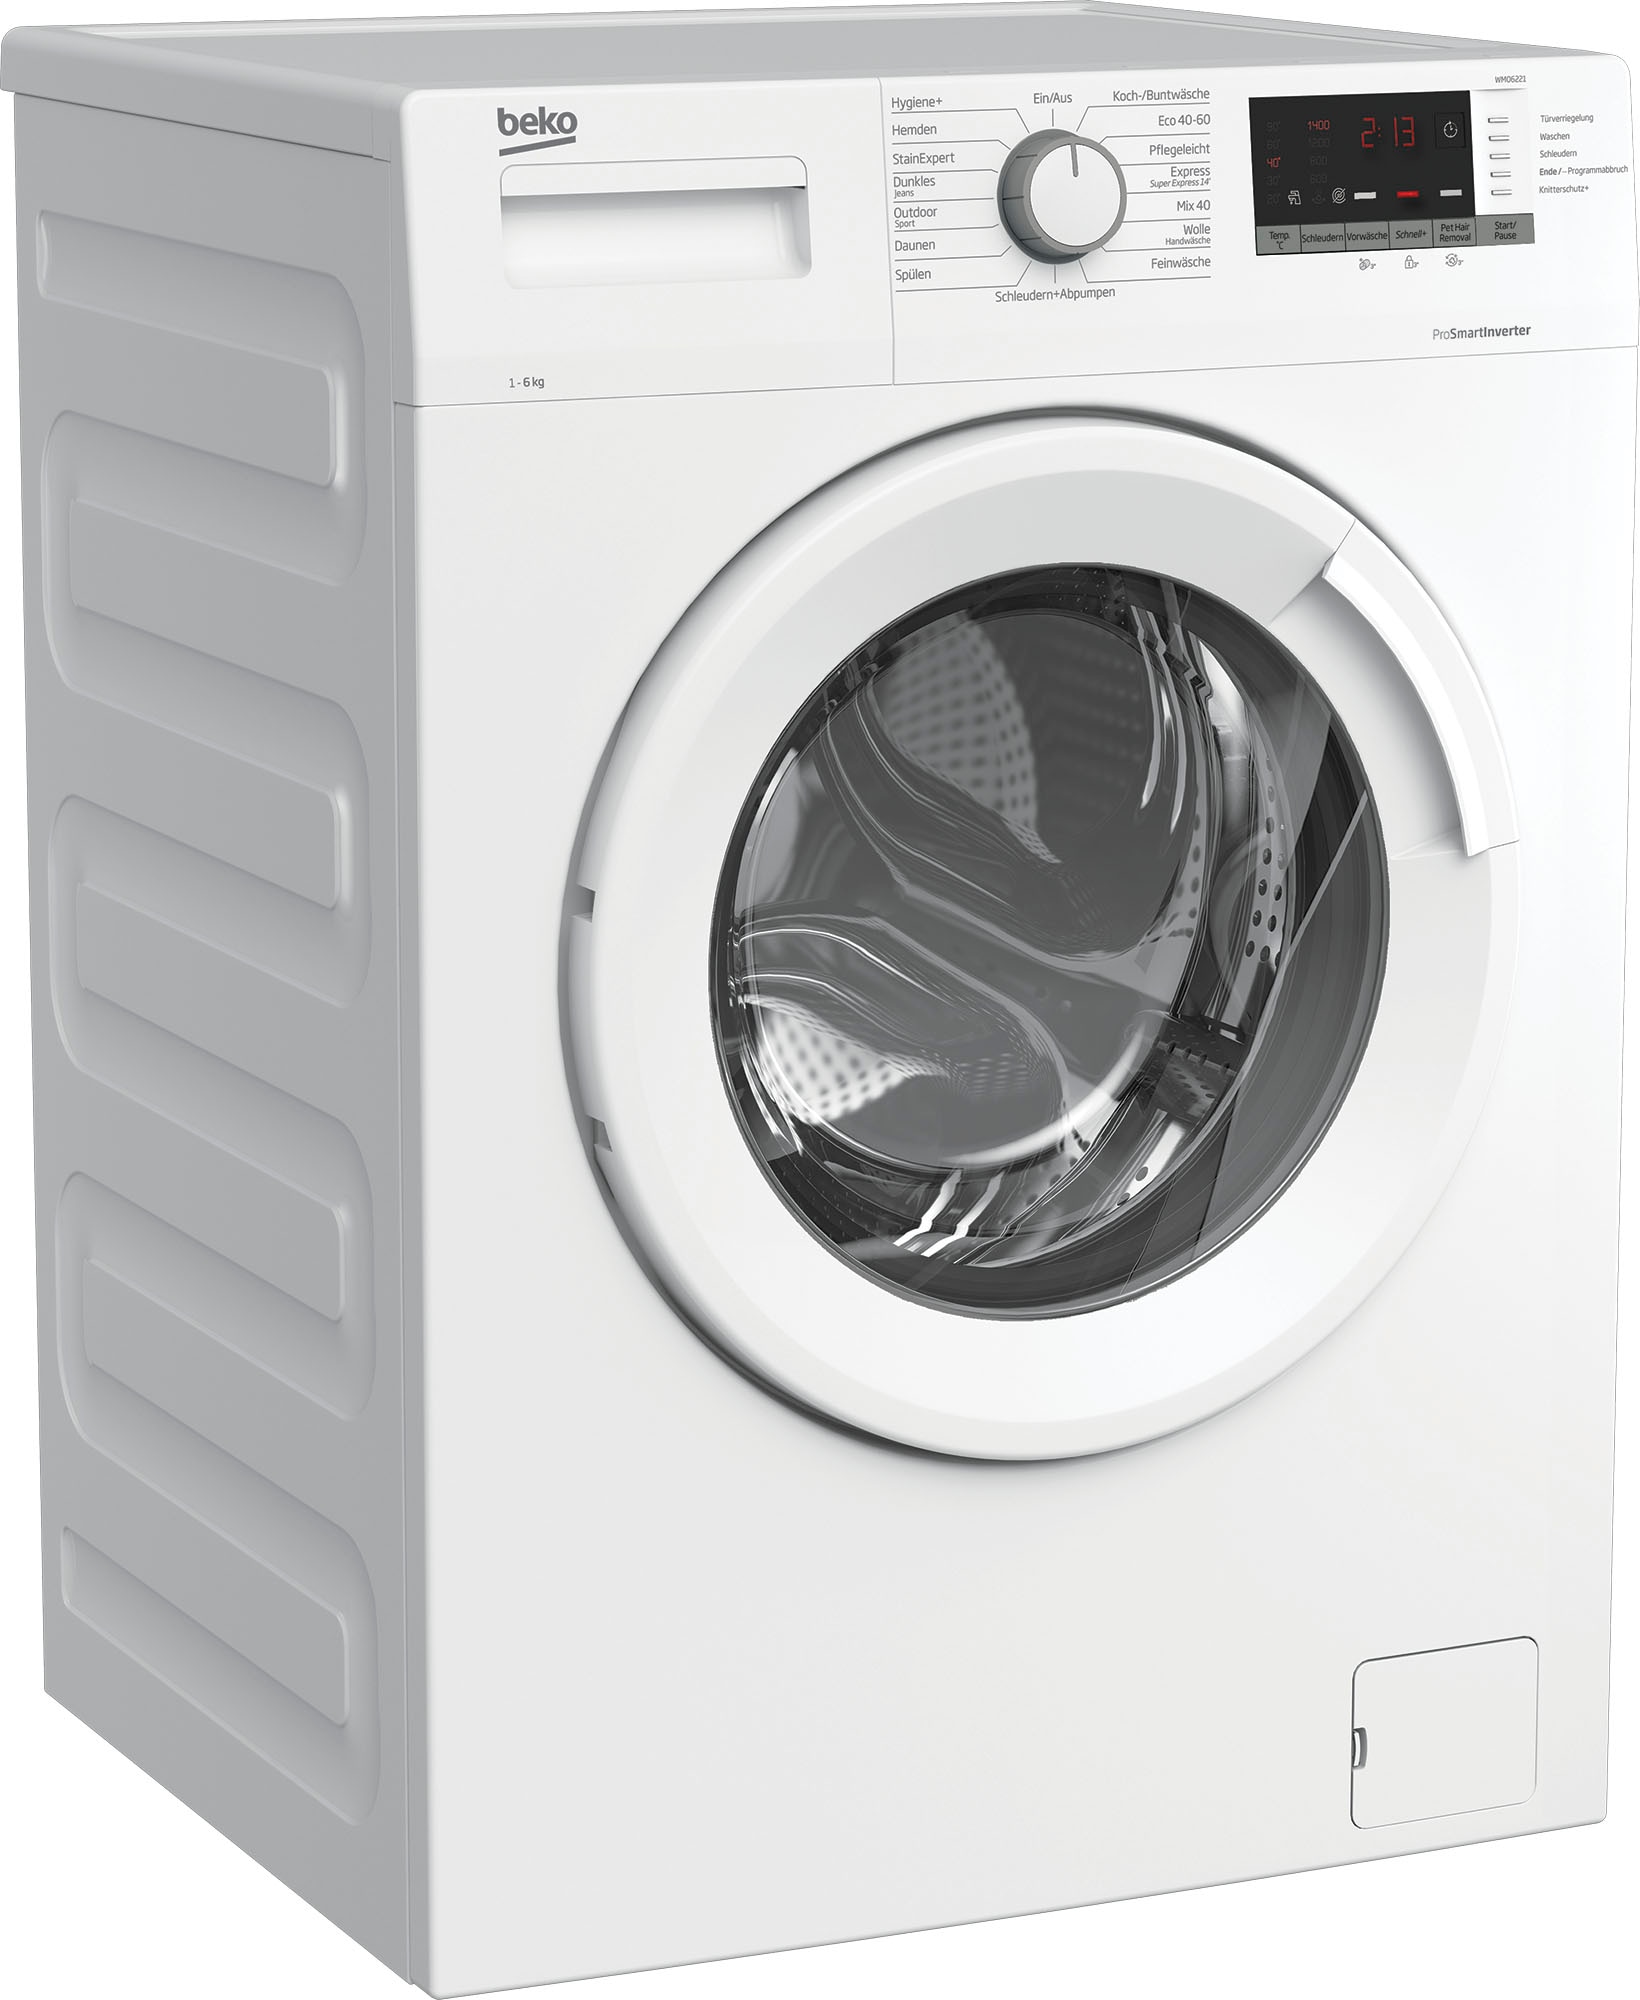 BEKO Waschmaschine »WMO6221«, WMO6221 7146543700, 6 kg, 1400 U/min auf  Raten kaufen